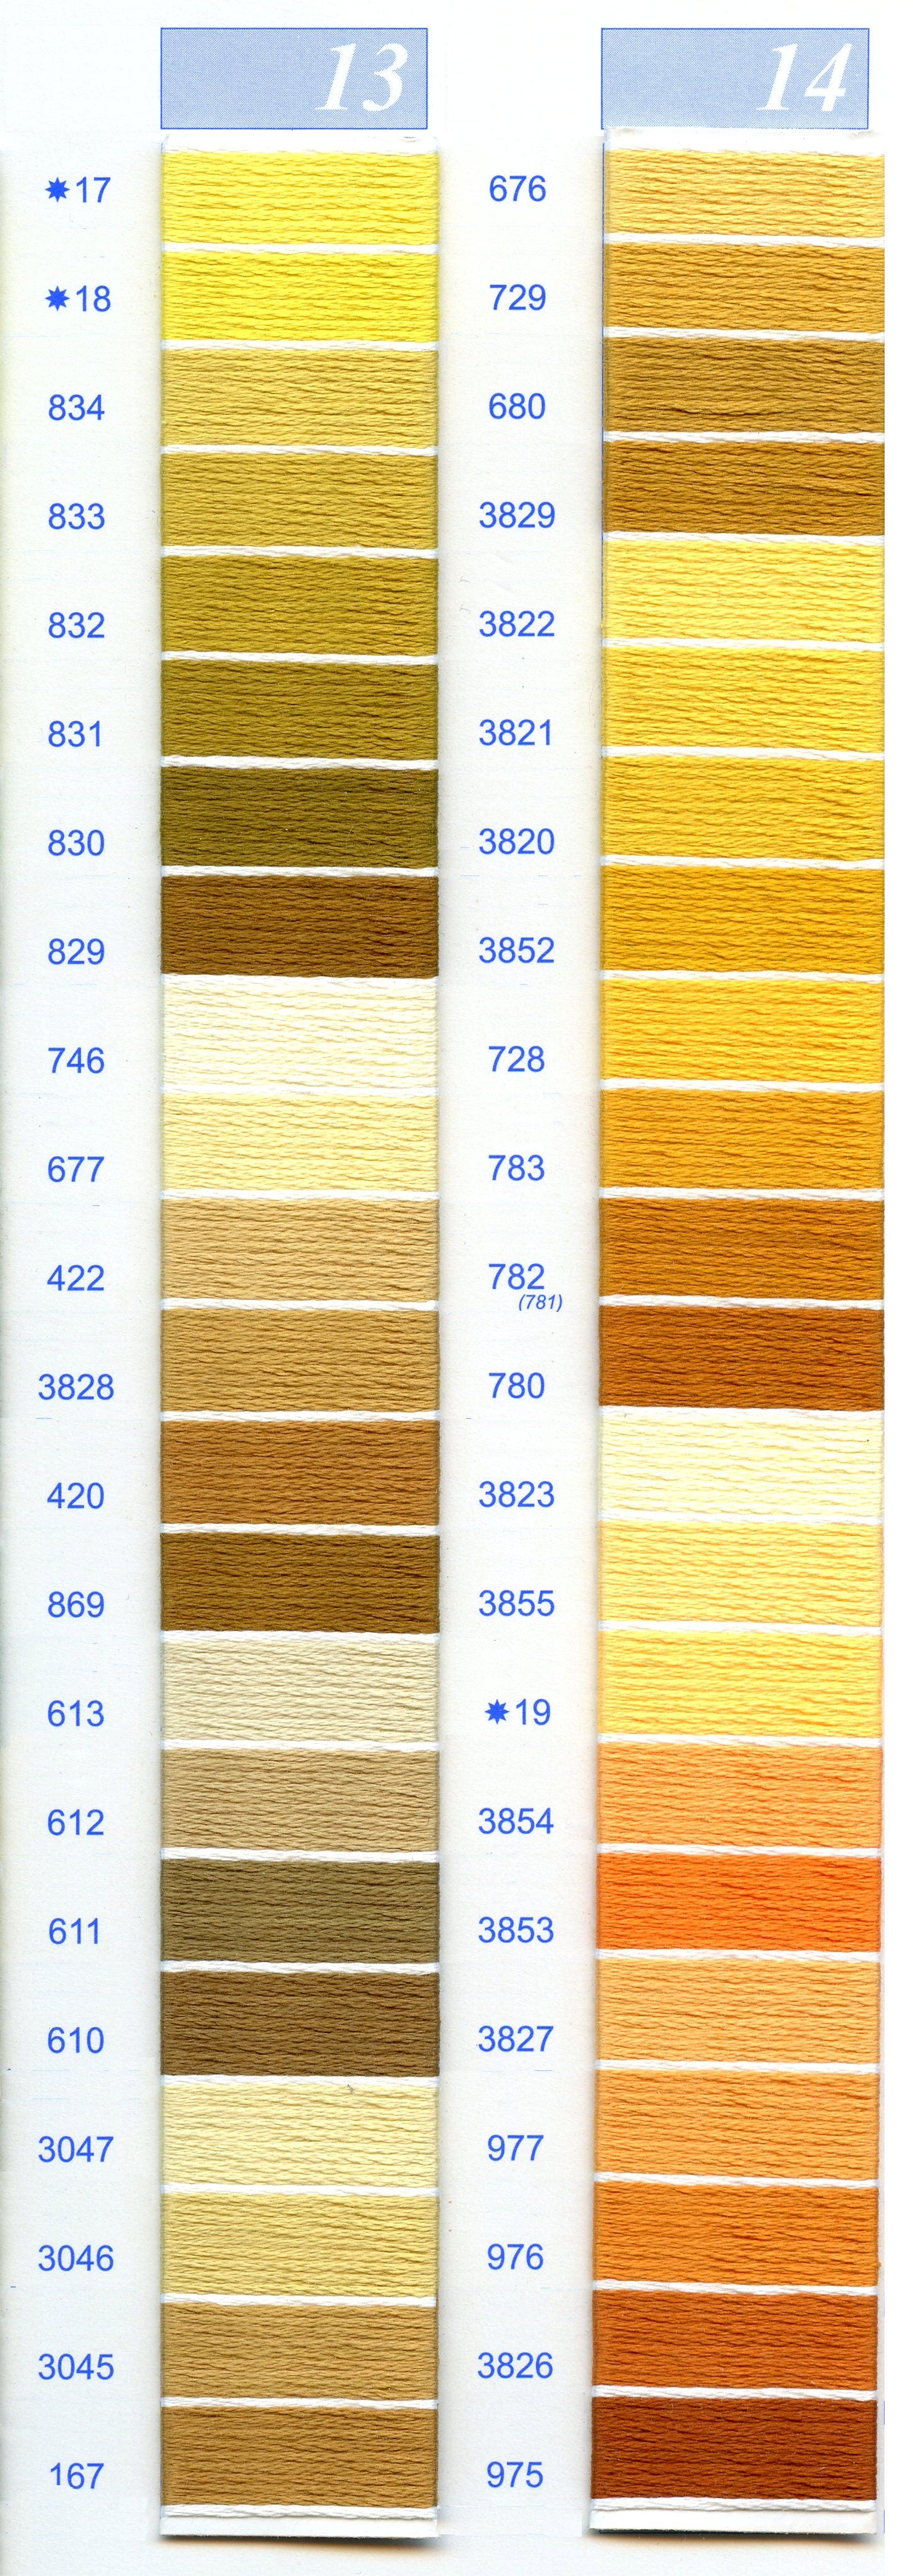 DMC Embroidery Floss Chart - Columns 13 & 14